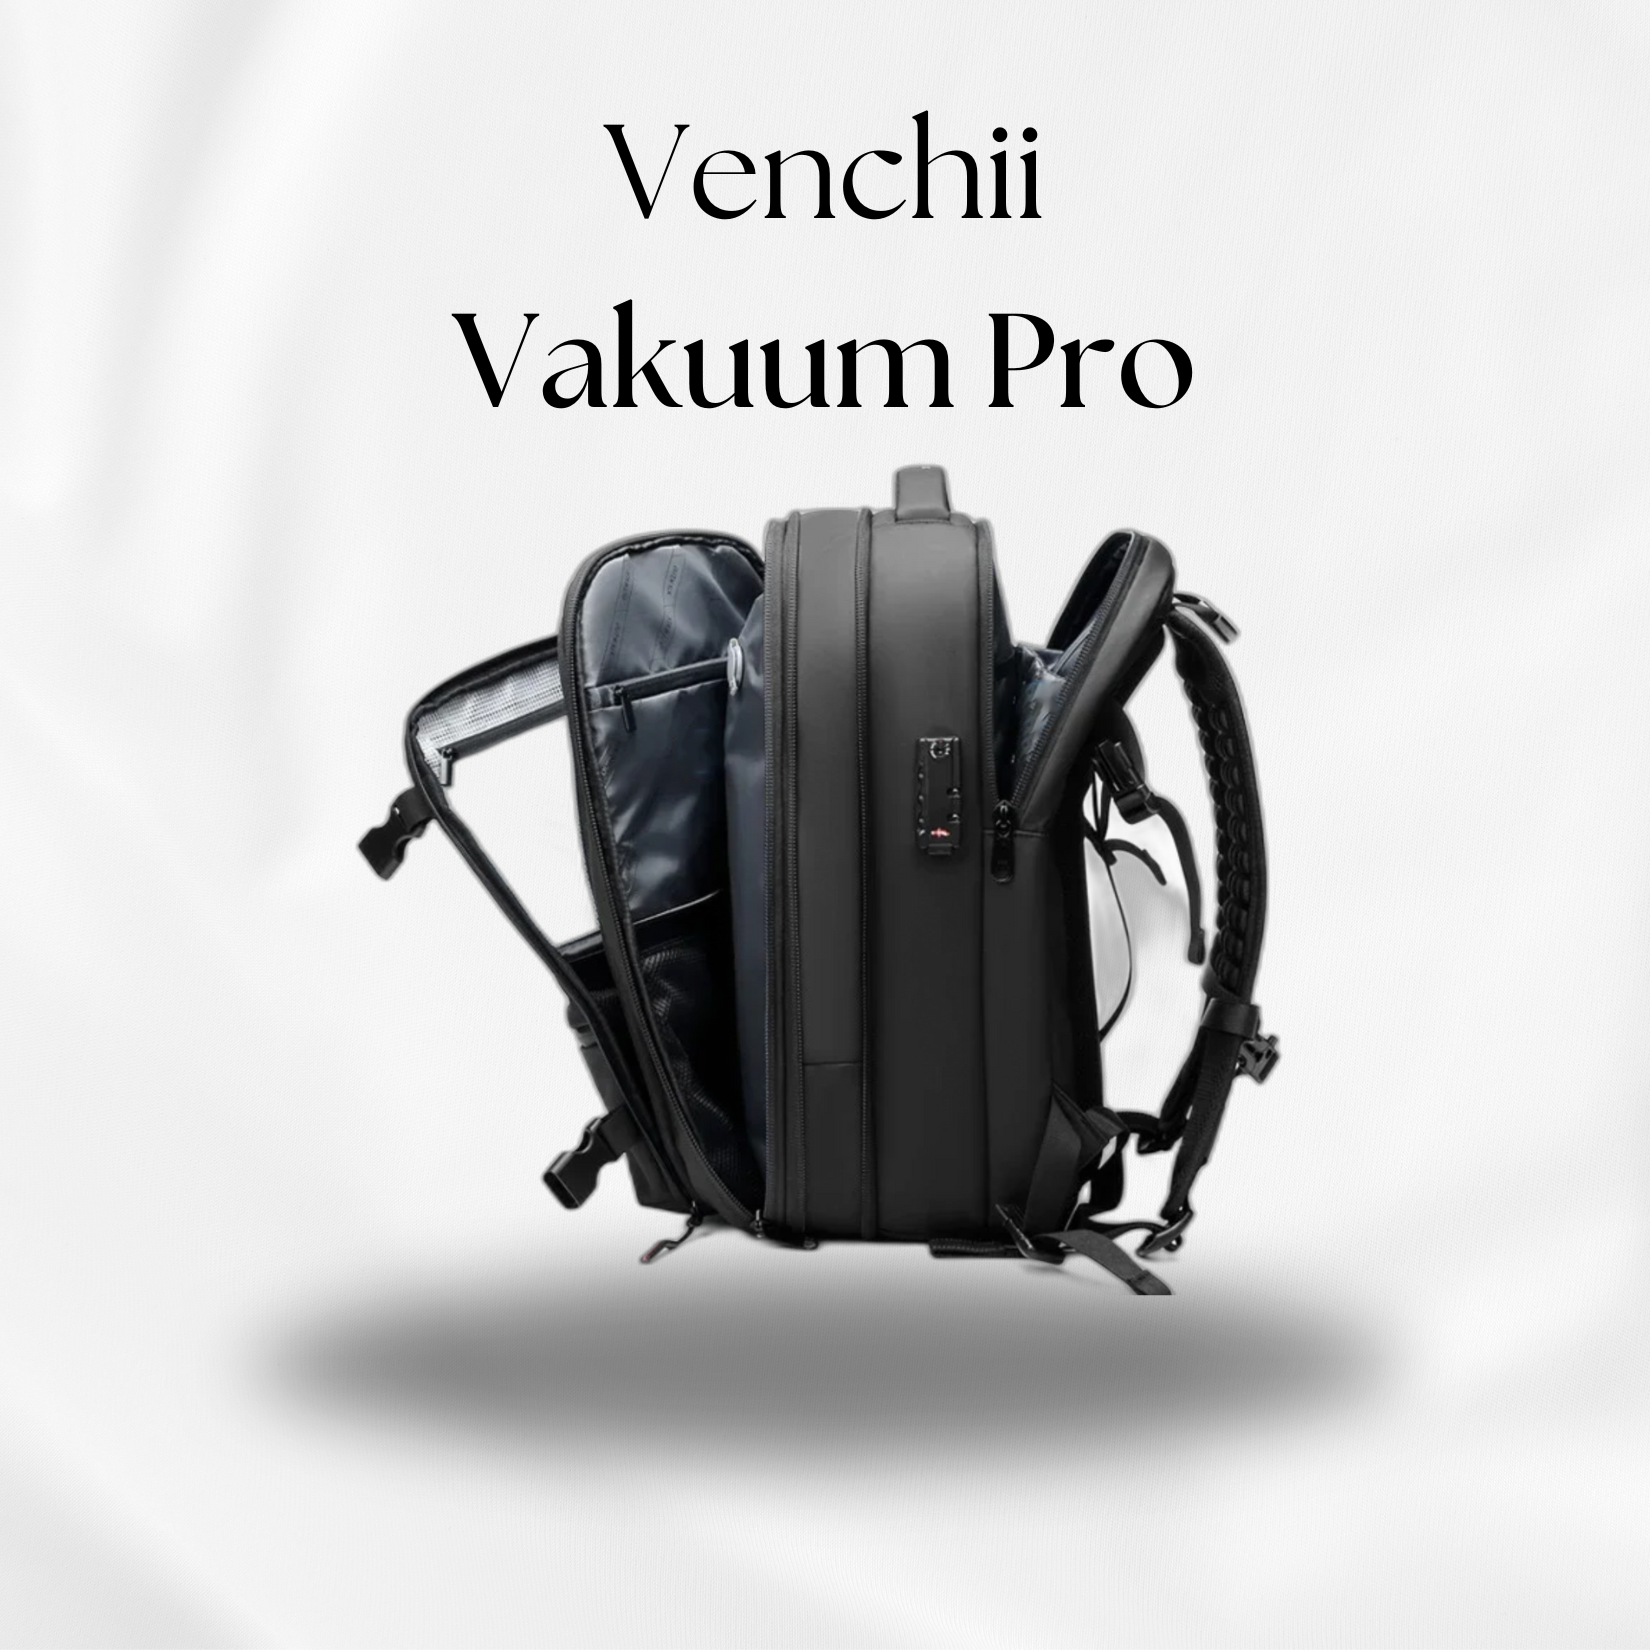 Venchii AirlineBag - Vakuum Pro